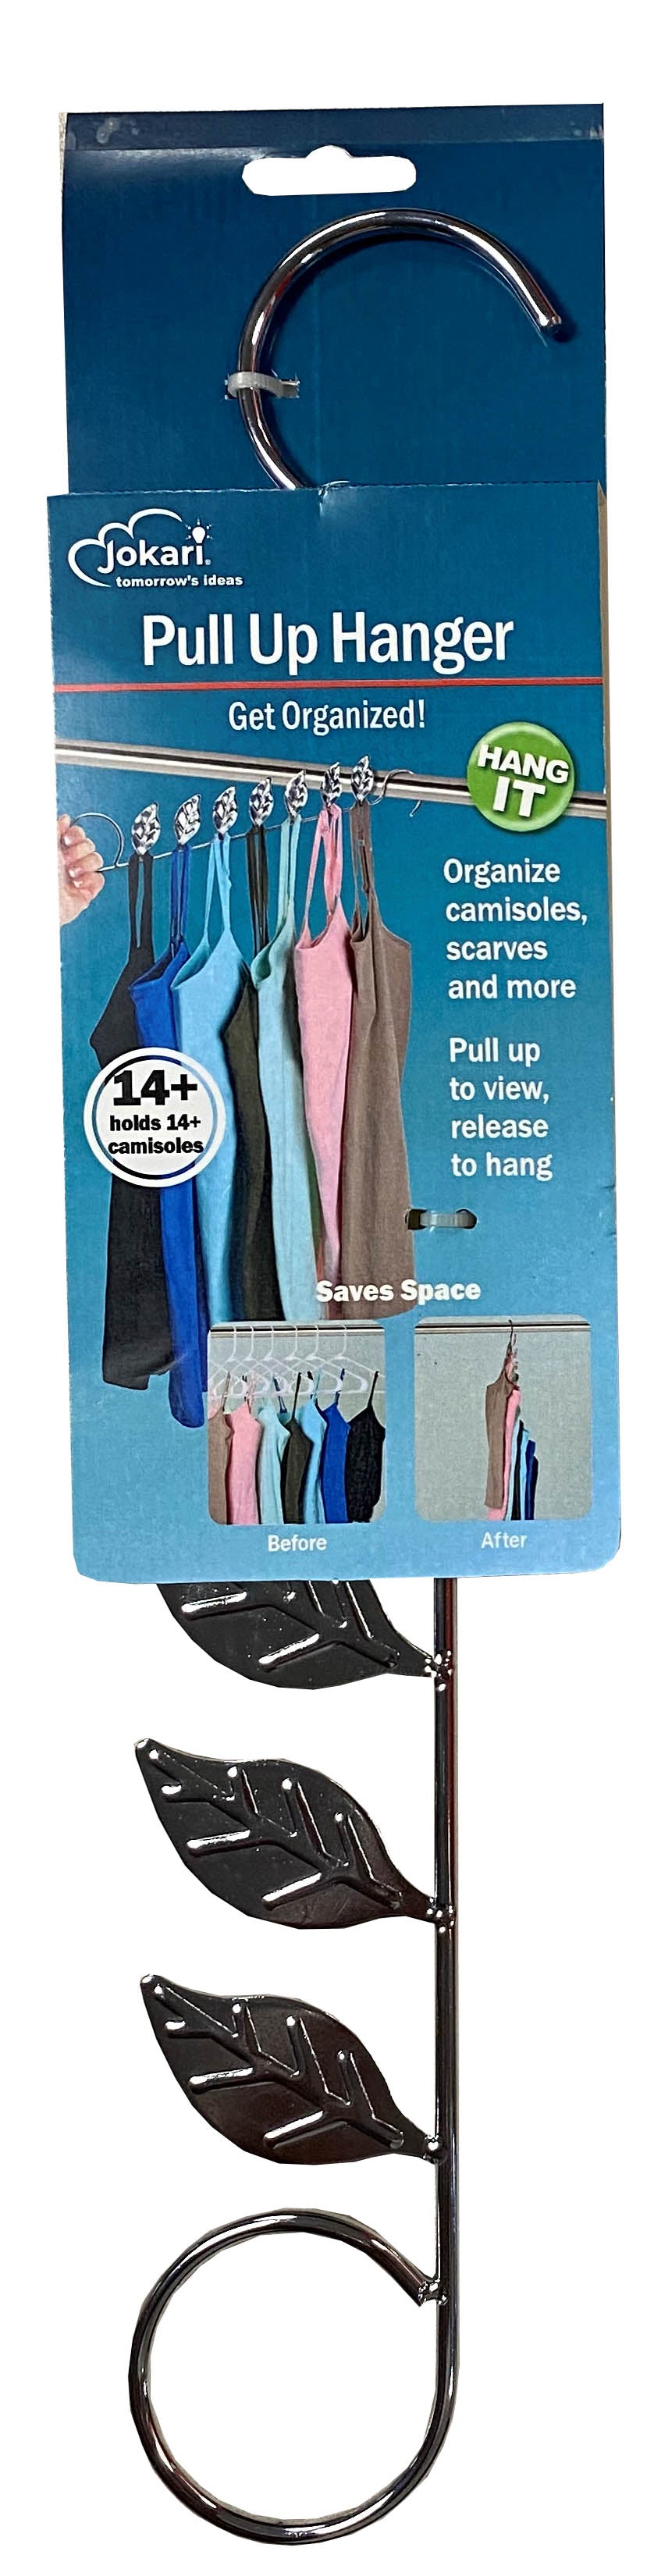 Pull Up Hanger - Get Organized!